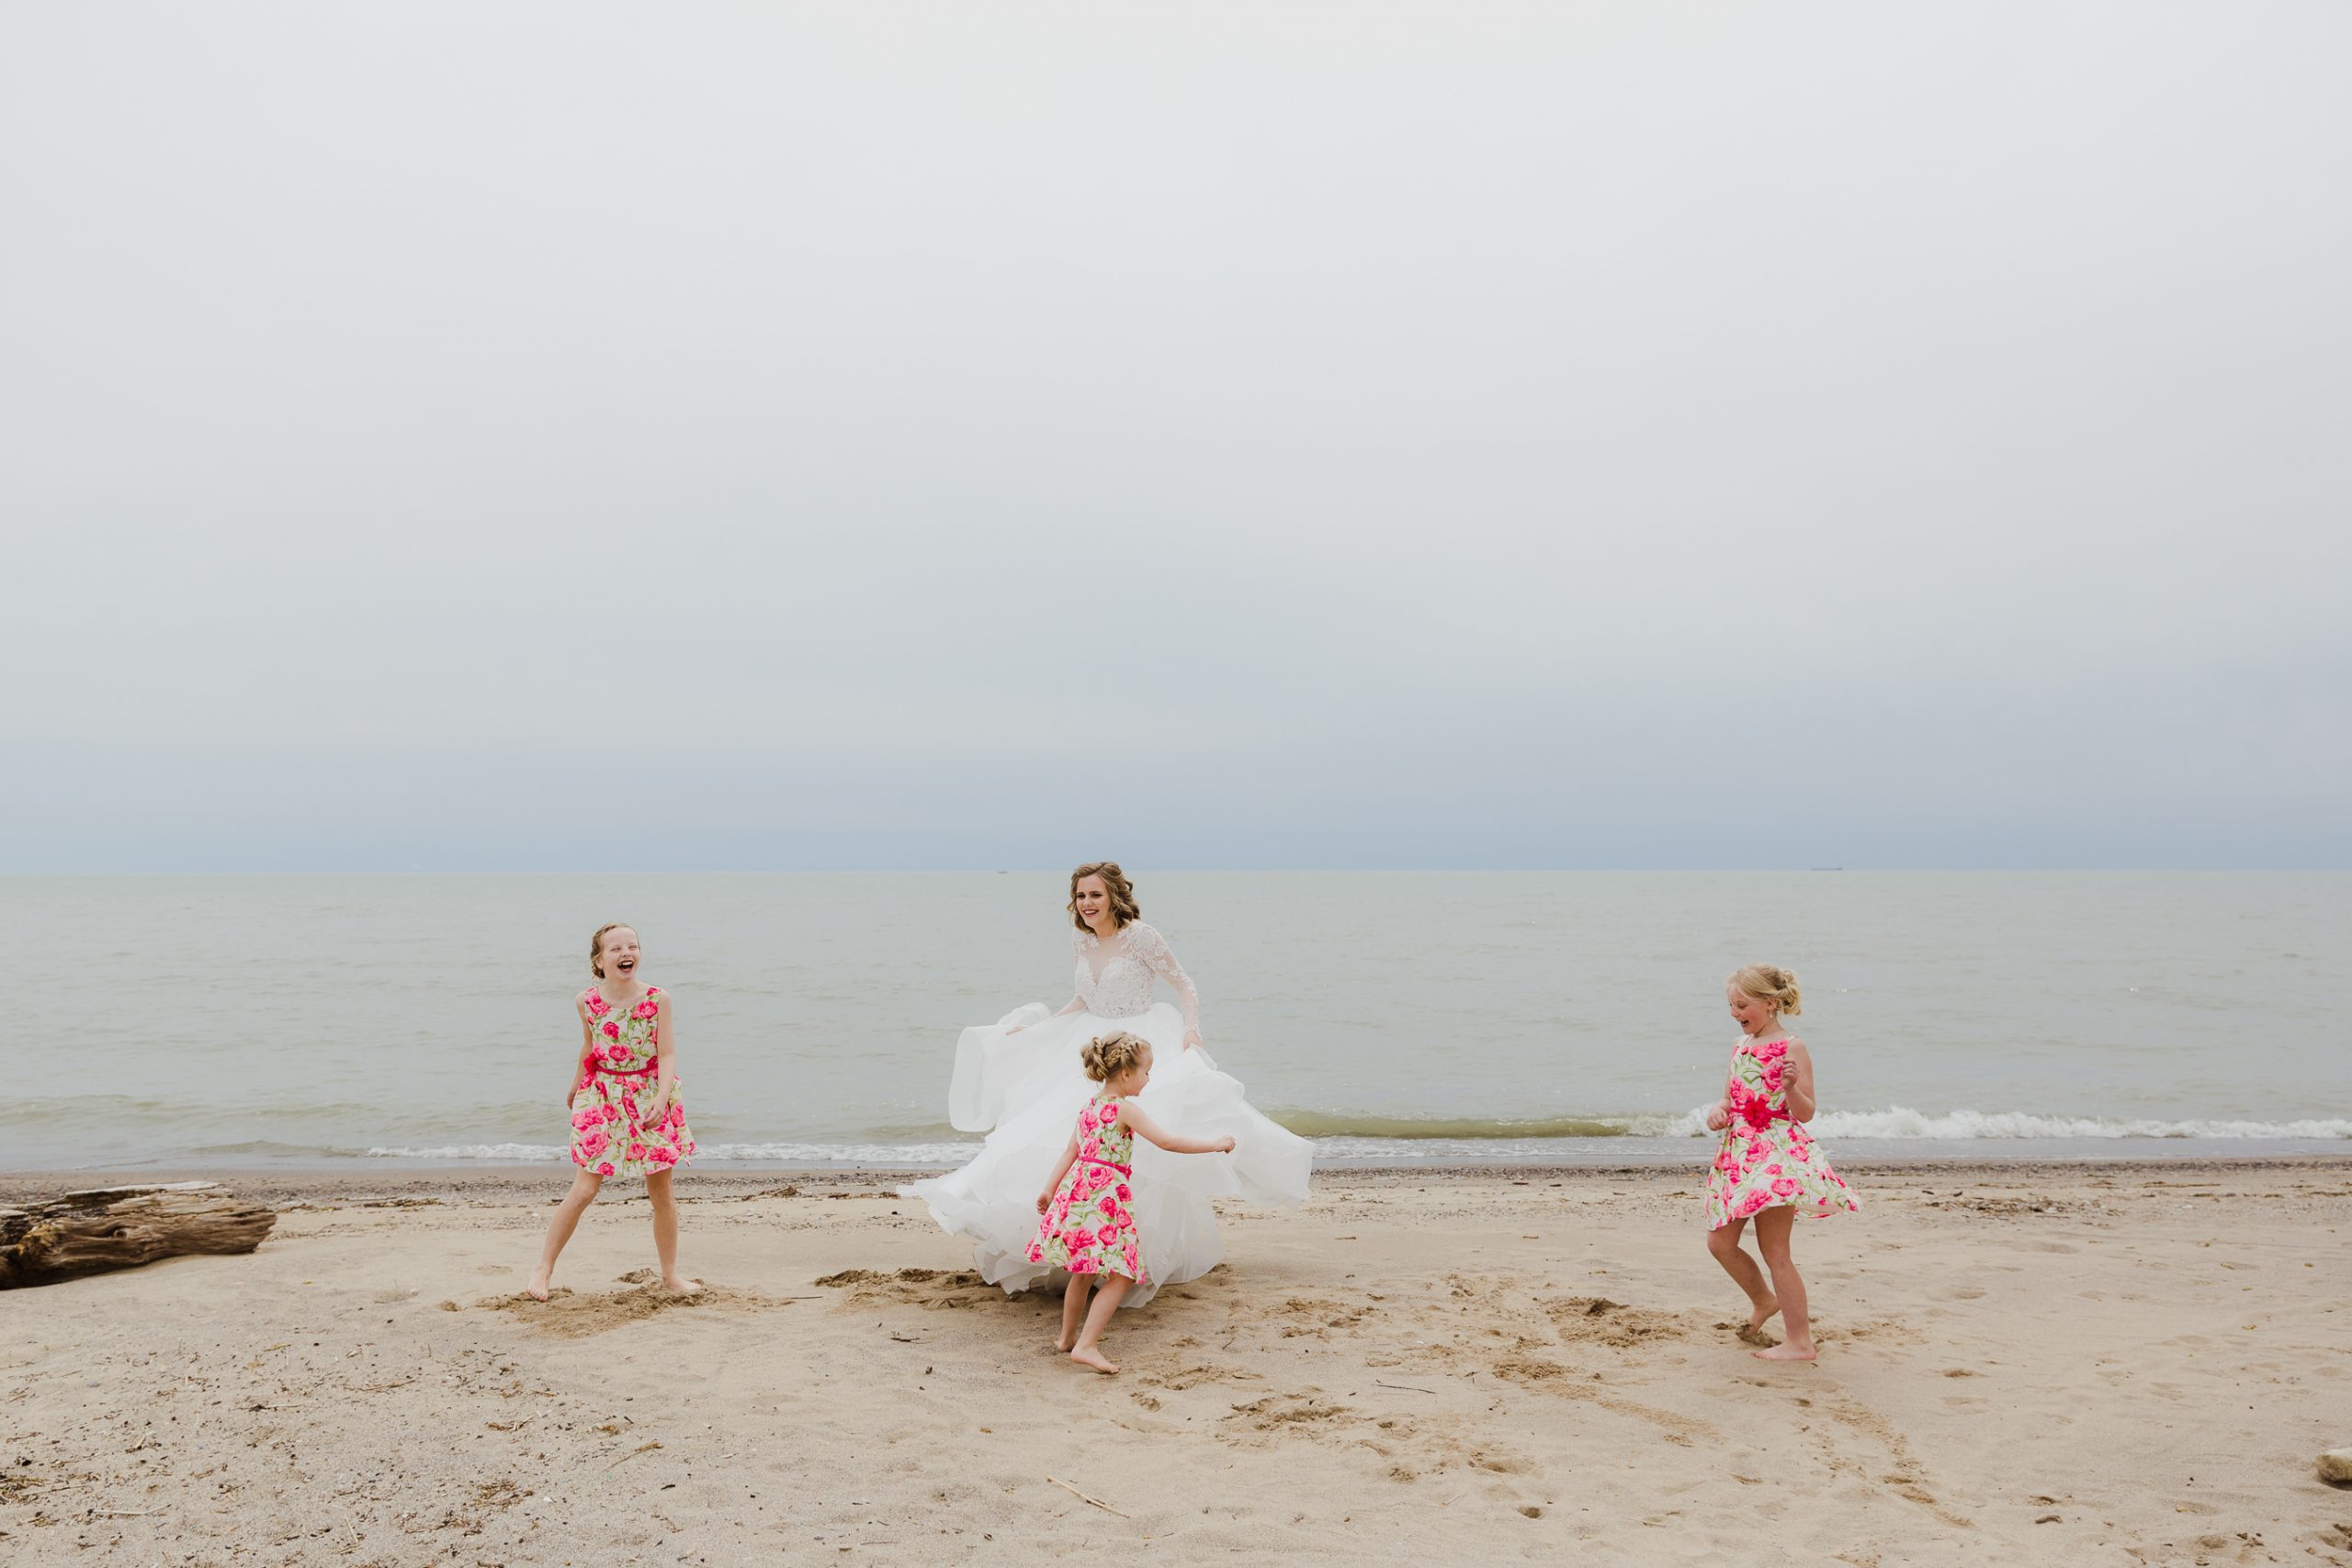 Wedding photo flower girls with bride cute idea spinning on the beach